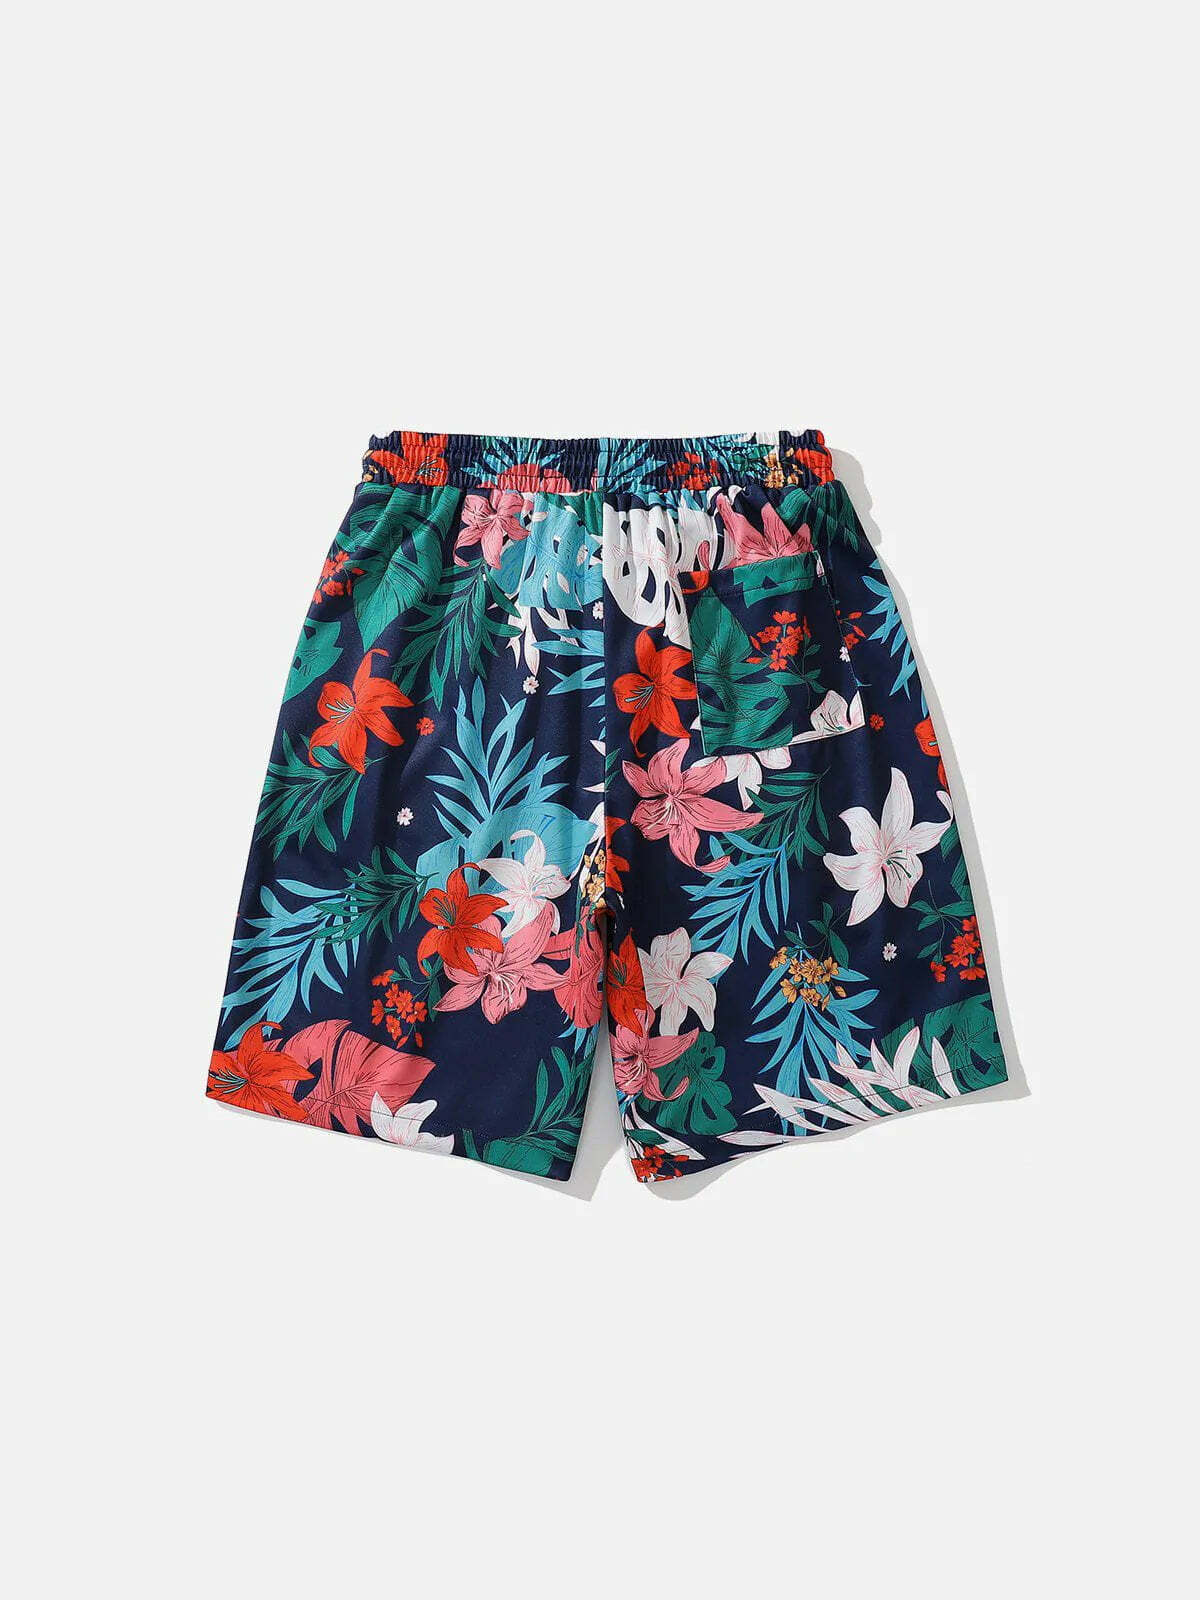 botanical print shorts vibrant natureinspired streetwear 3043